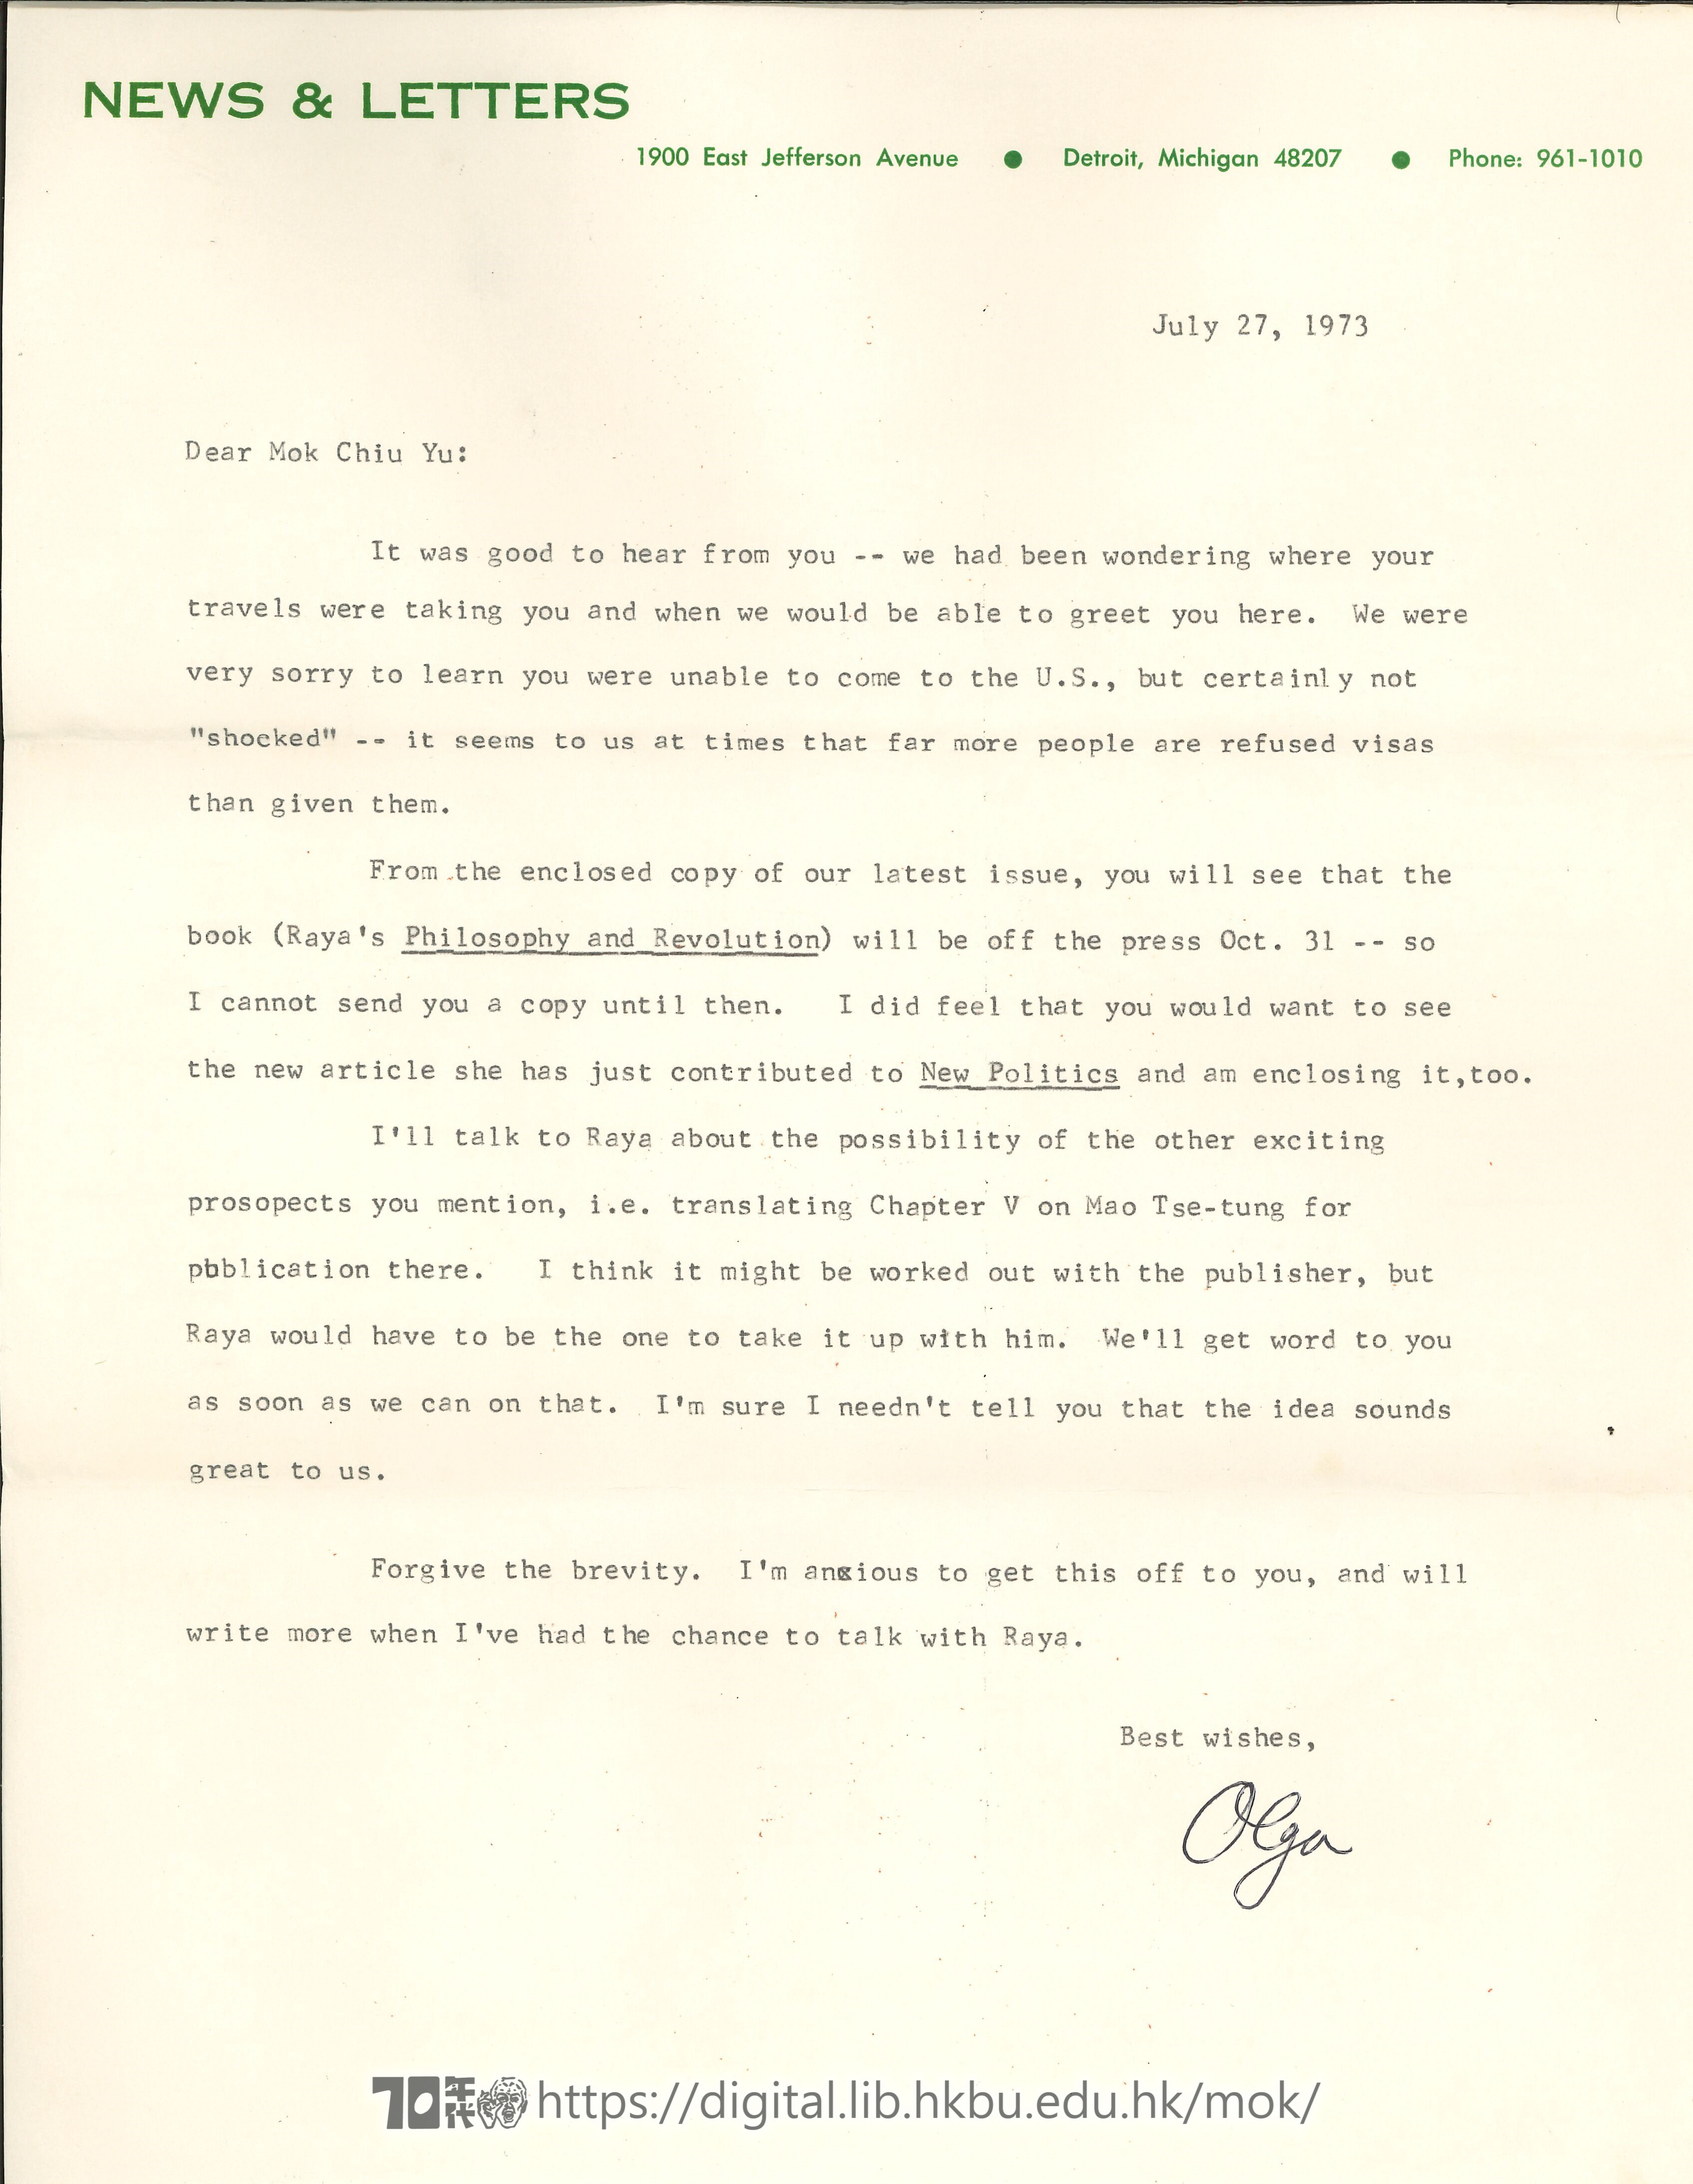   Letter from Olga to Mok Chiu Yu Olga 